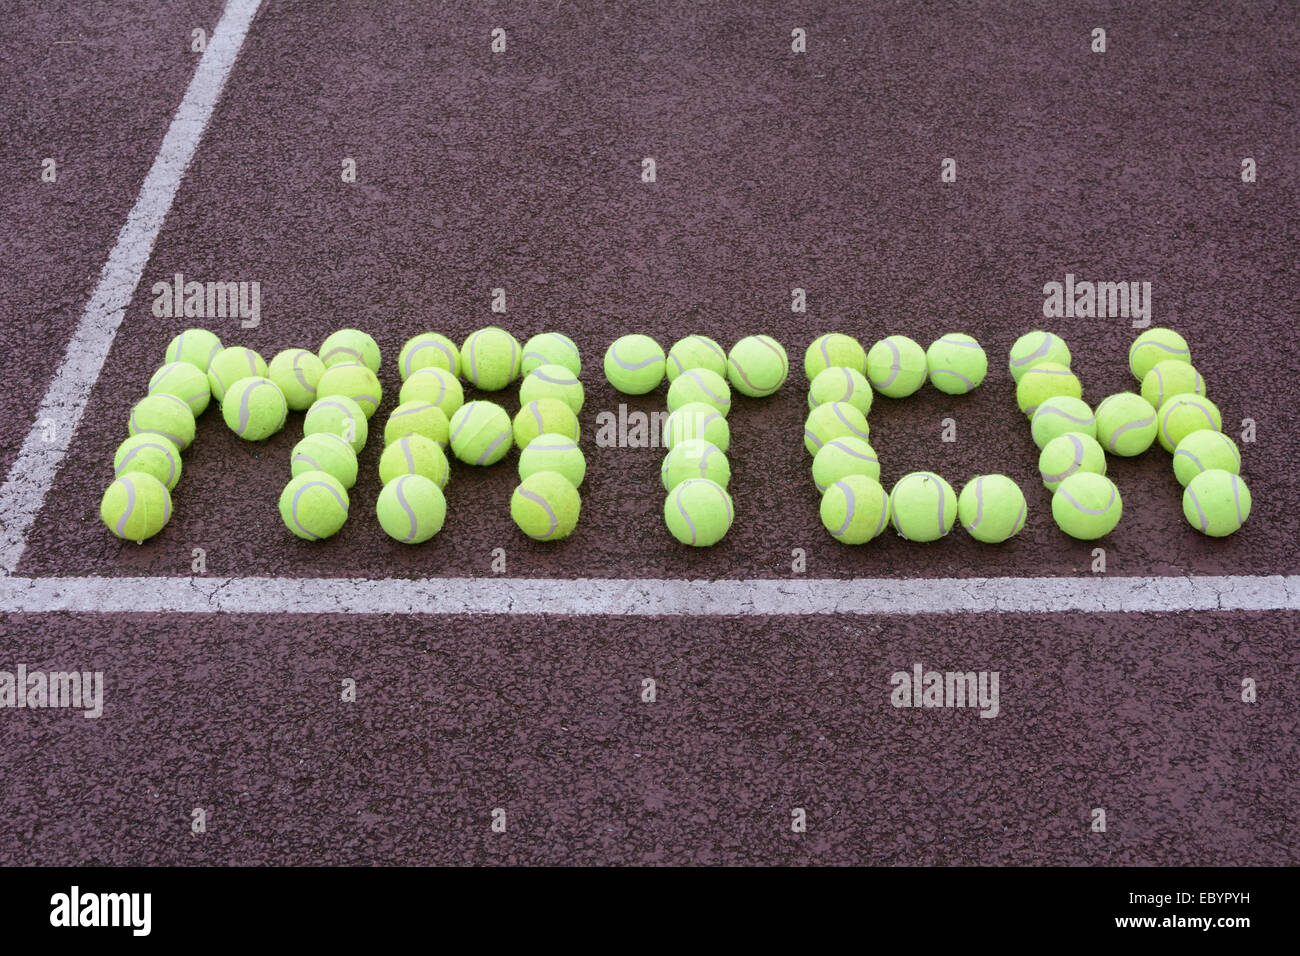 Tennis match made from tennis balls on hard court Stock Photo